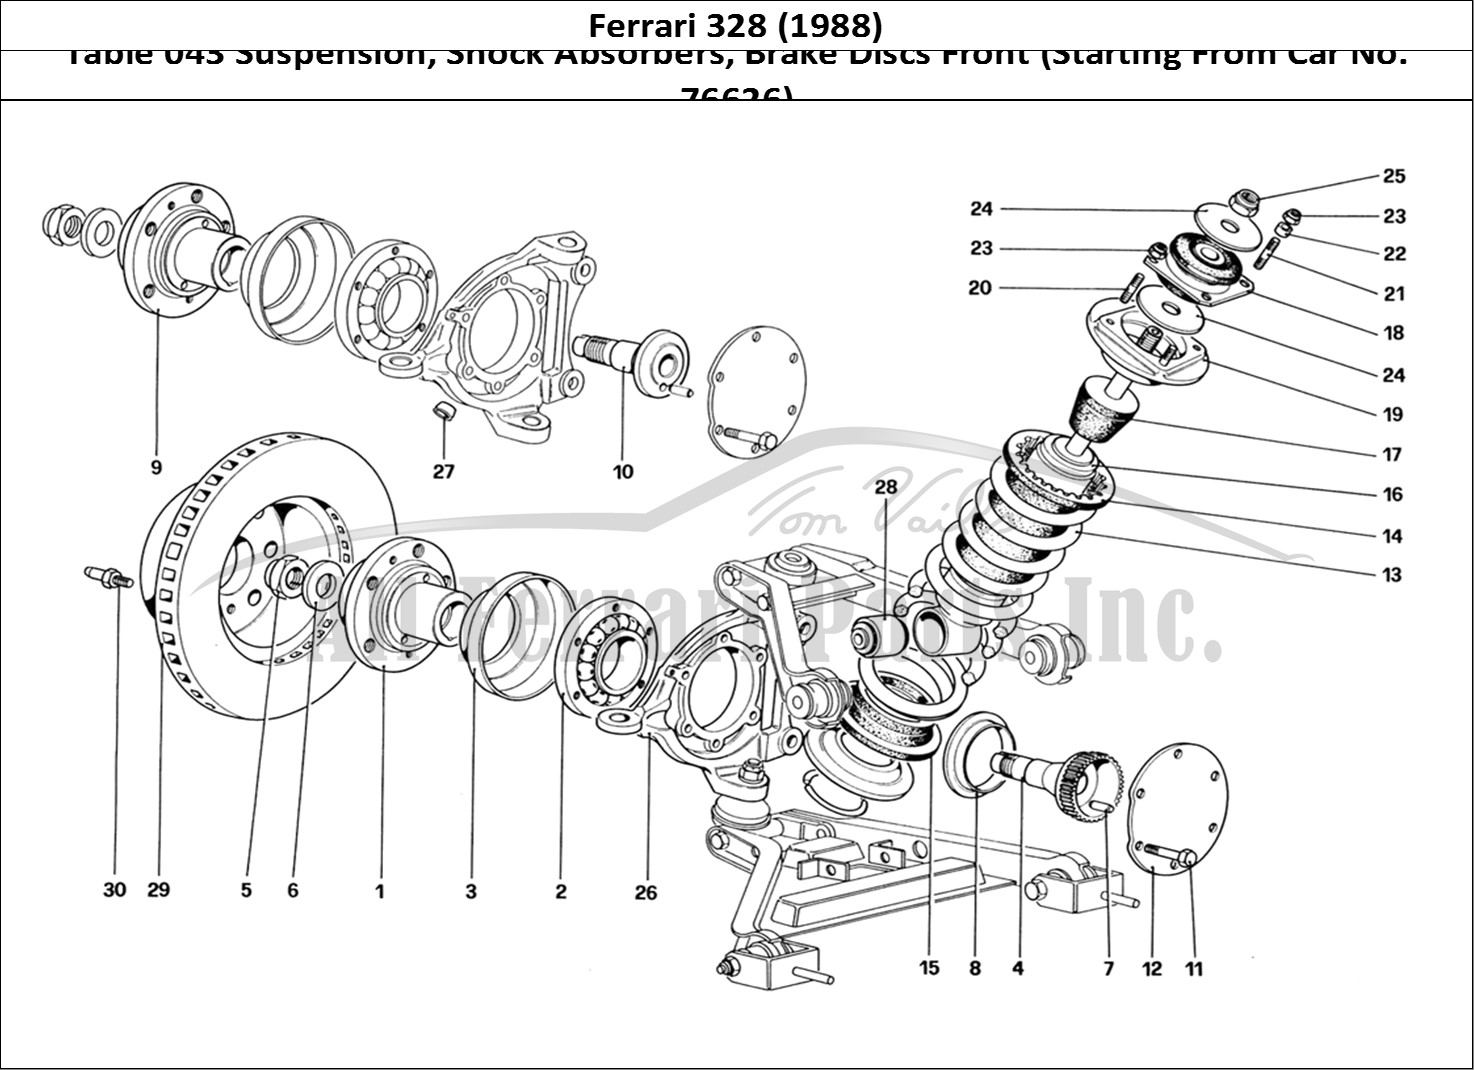 Ferrari Parts Ferrari 328 (1988) Page 043 Front Suspension - Shock